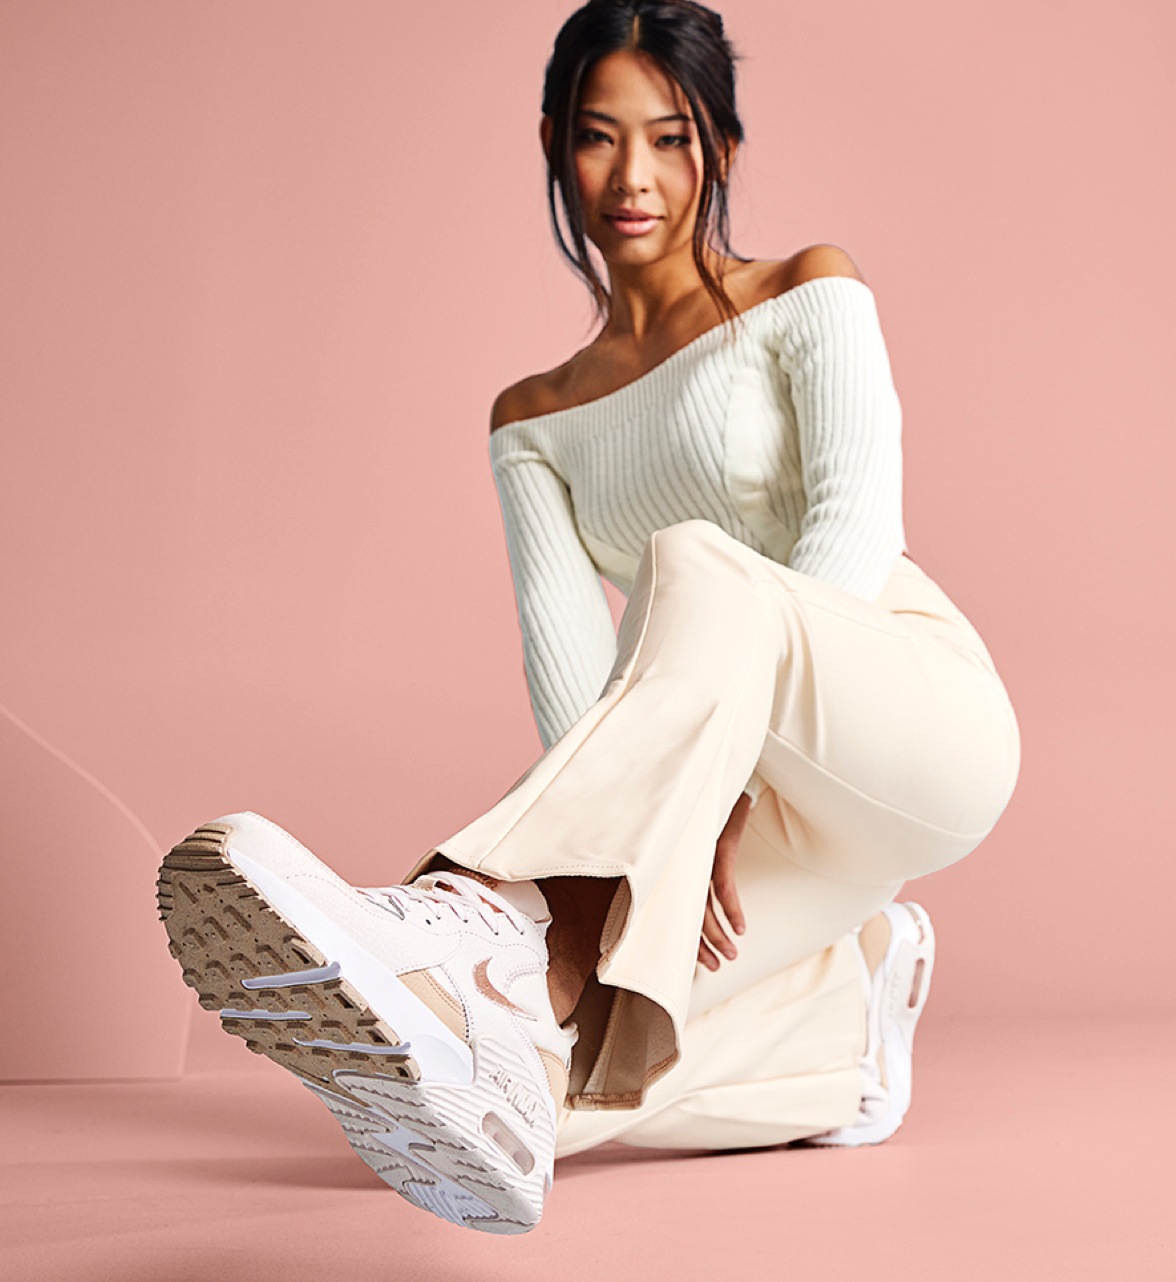 Woman wearing Nike Air Max sneakers